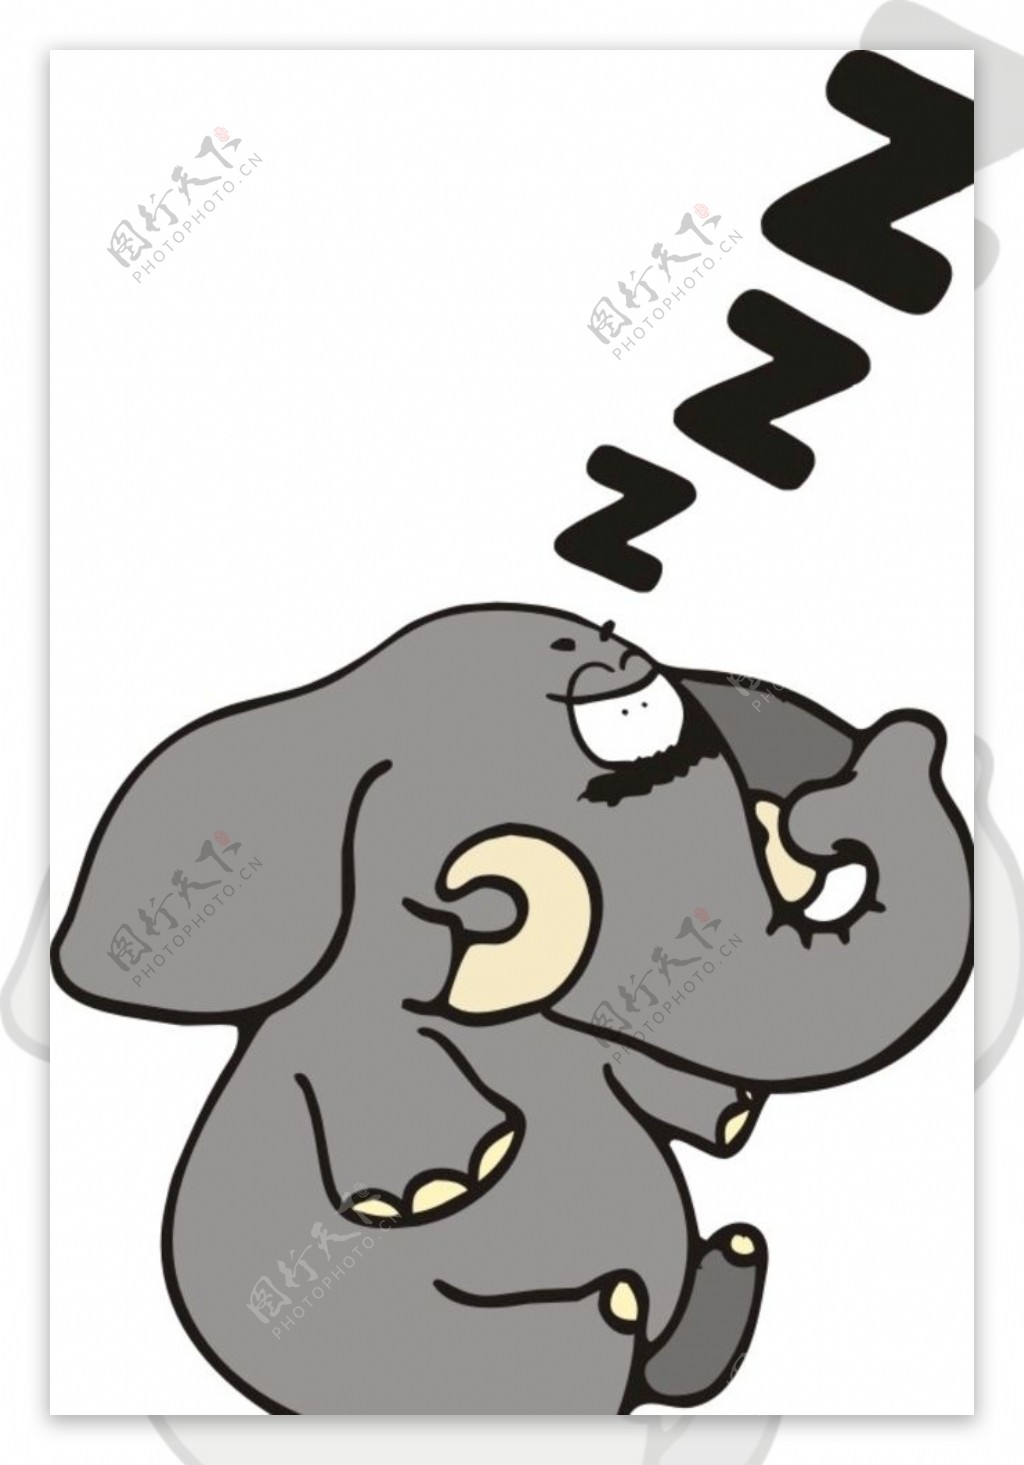 假装睡觉的大象